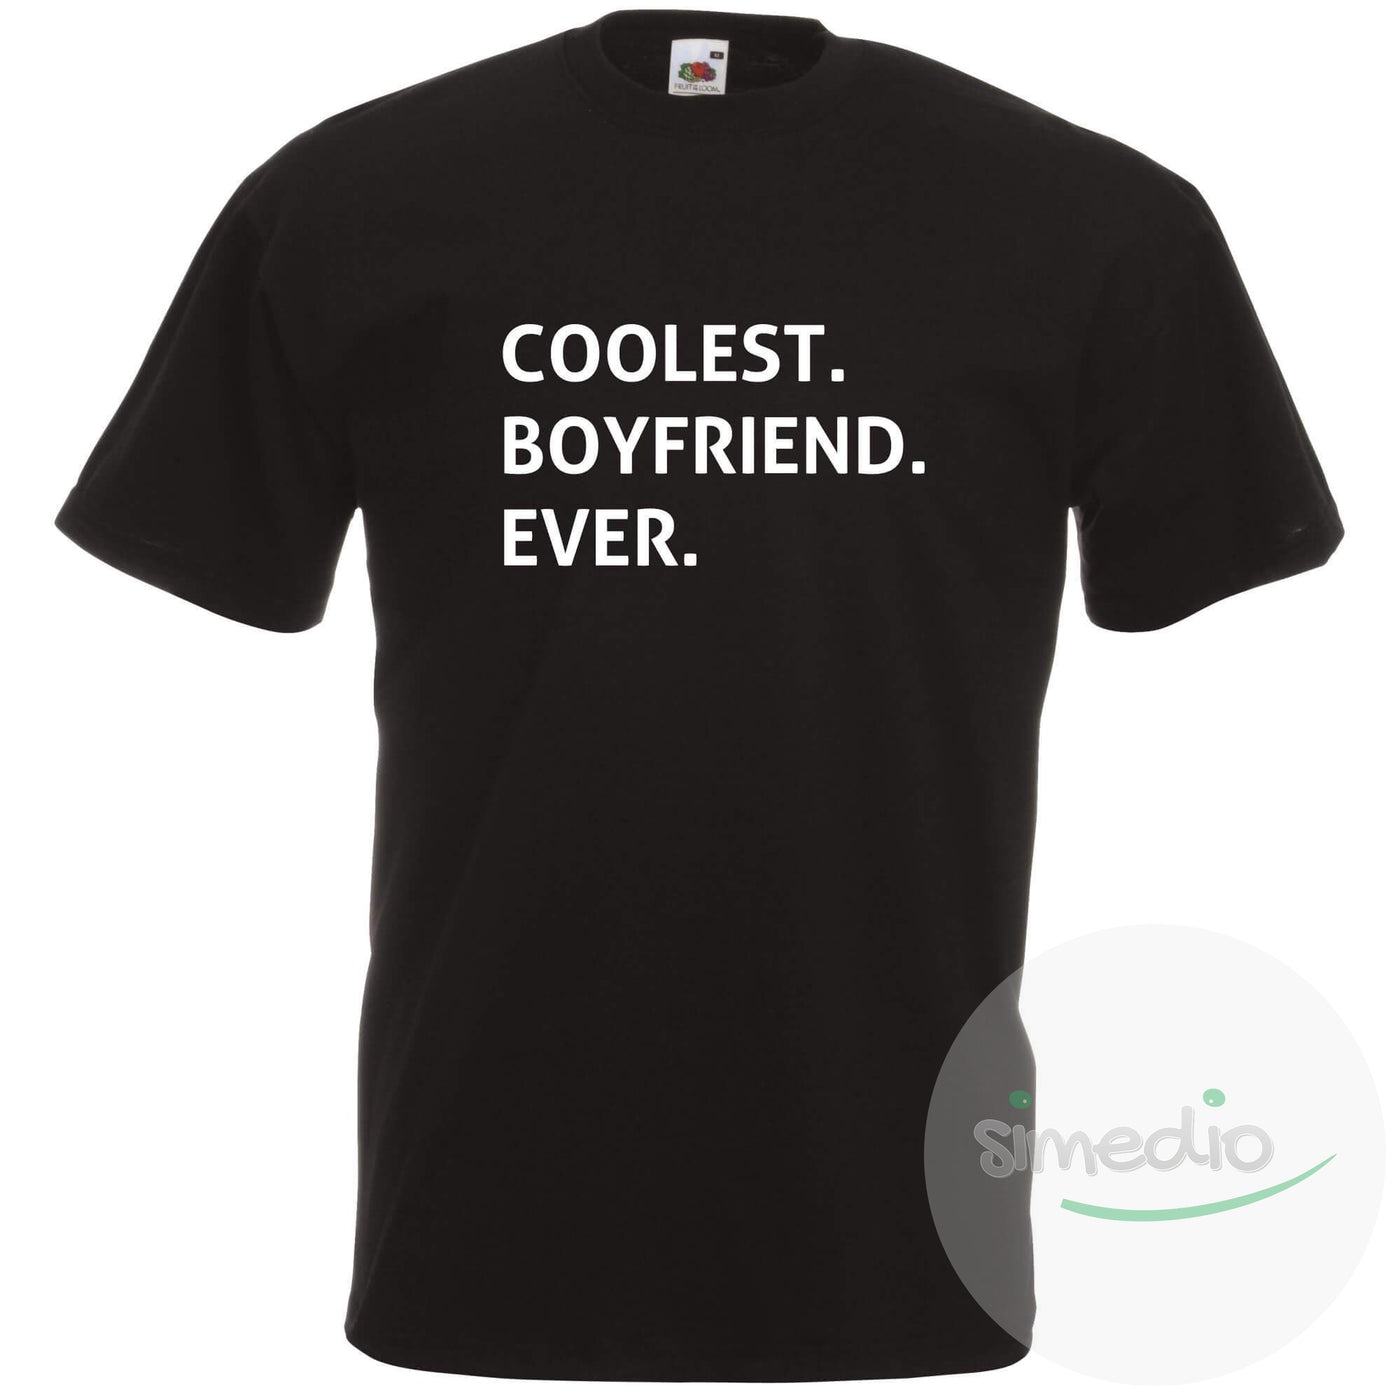 T-shirt original : COOLEST BOYFRIEND EVER, Noir, S, - SiMEDIO